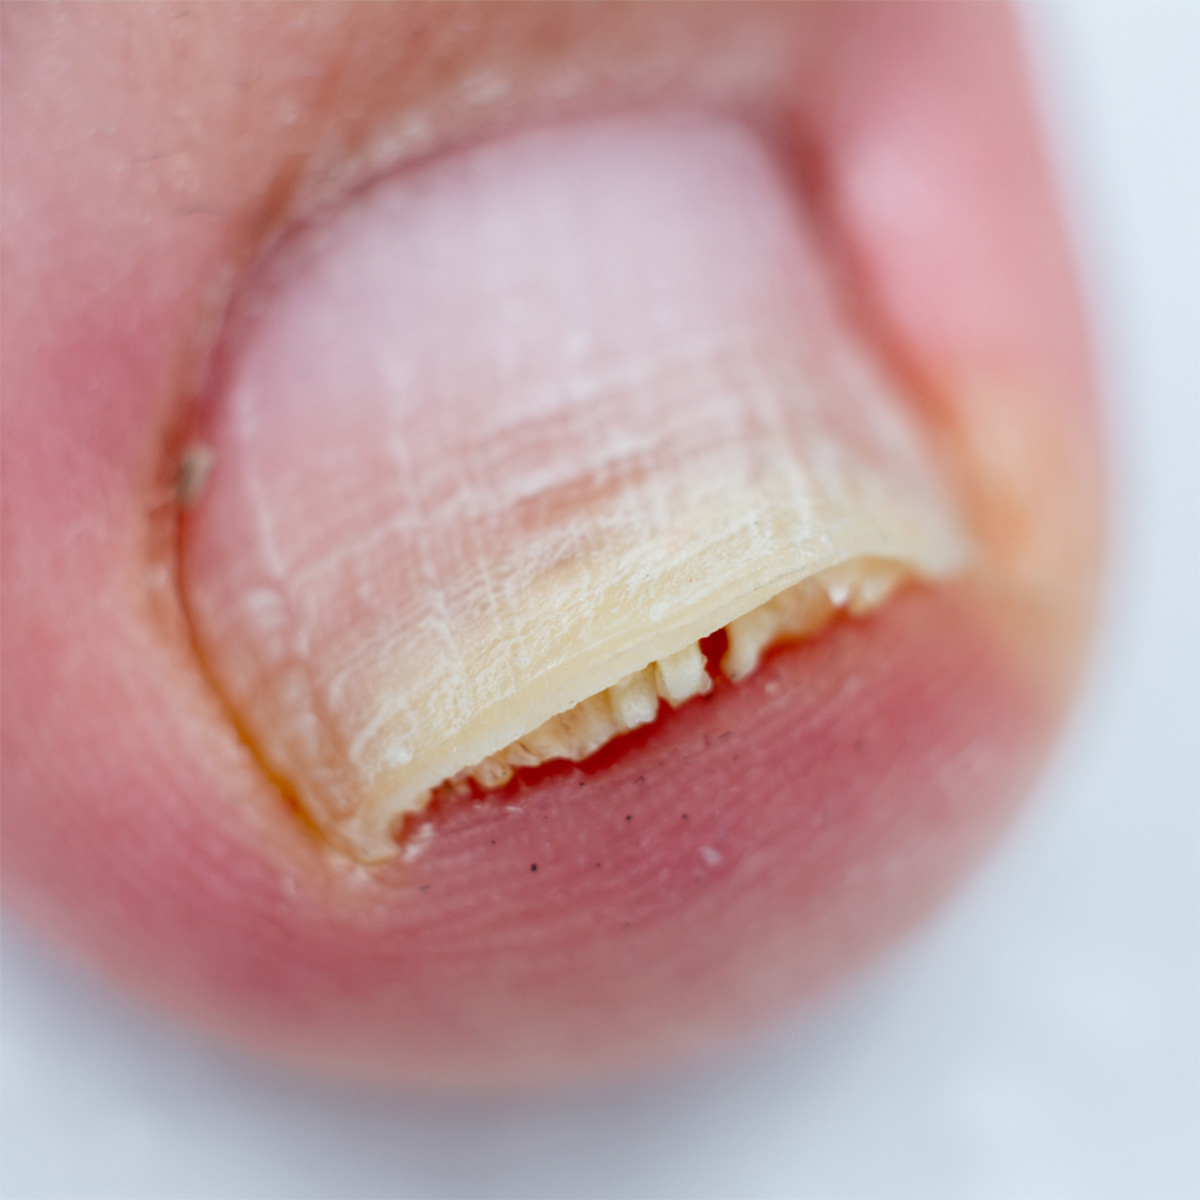 Badly Damaged Nails | Gel Polish Allergy, Nail Plate Burn, Onycholysis -  YouTube